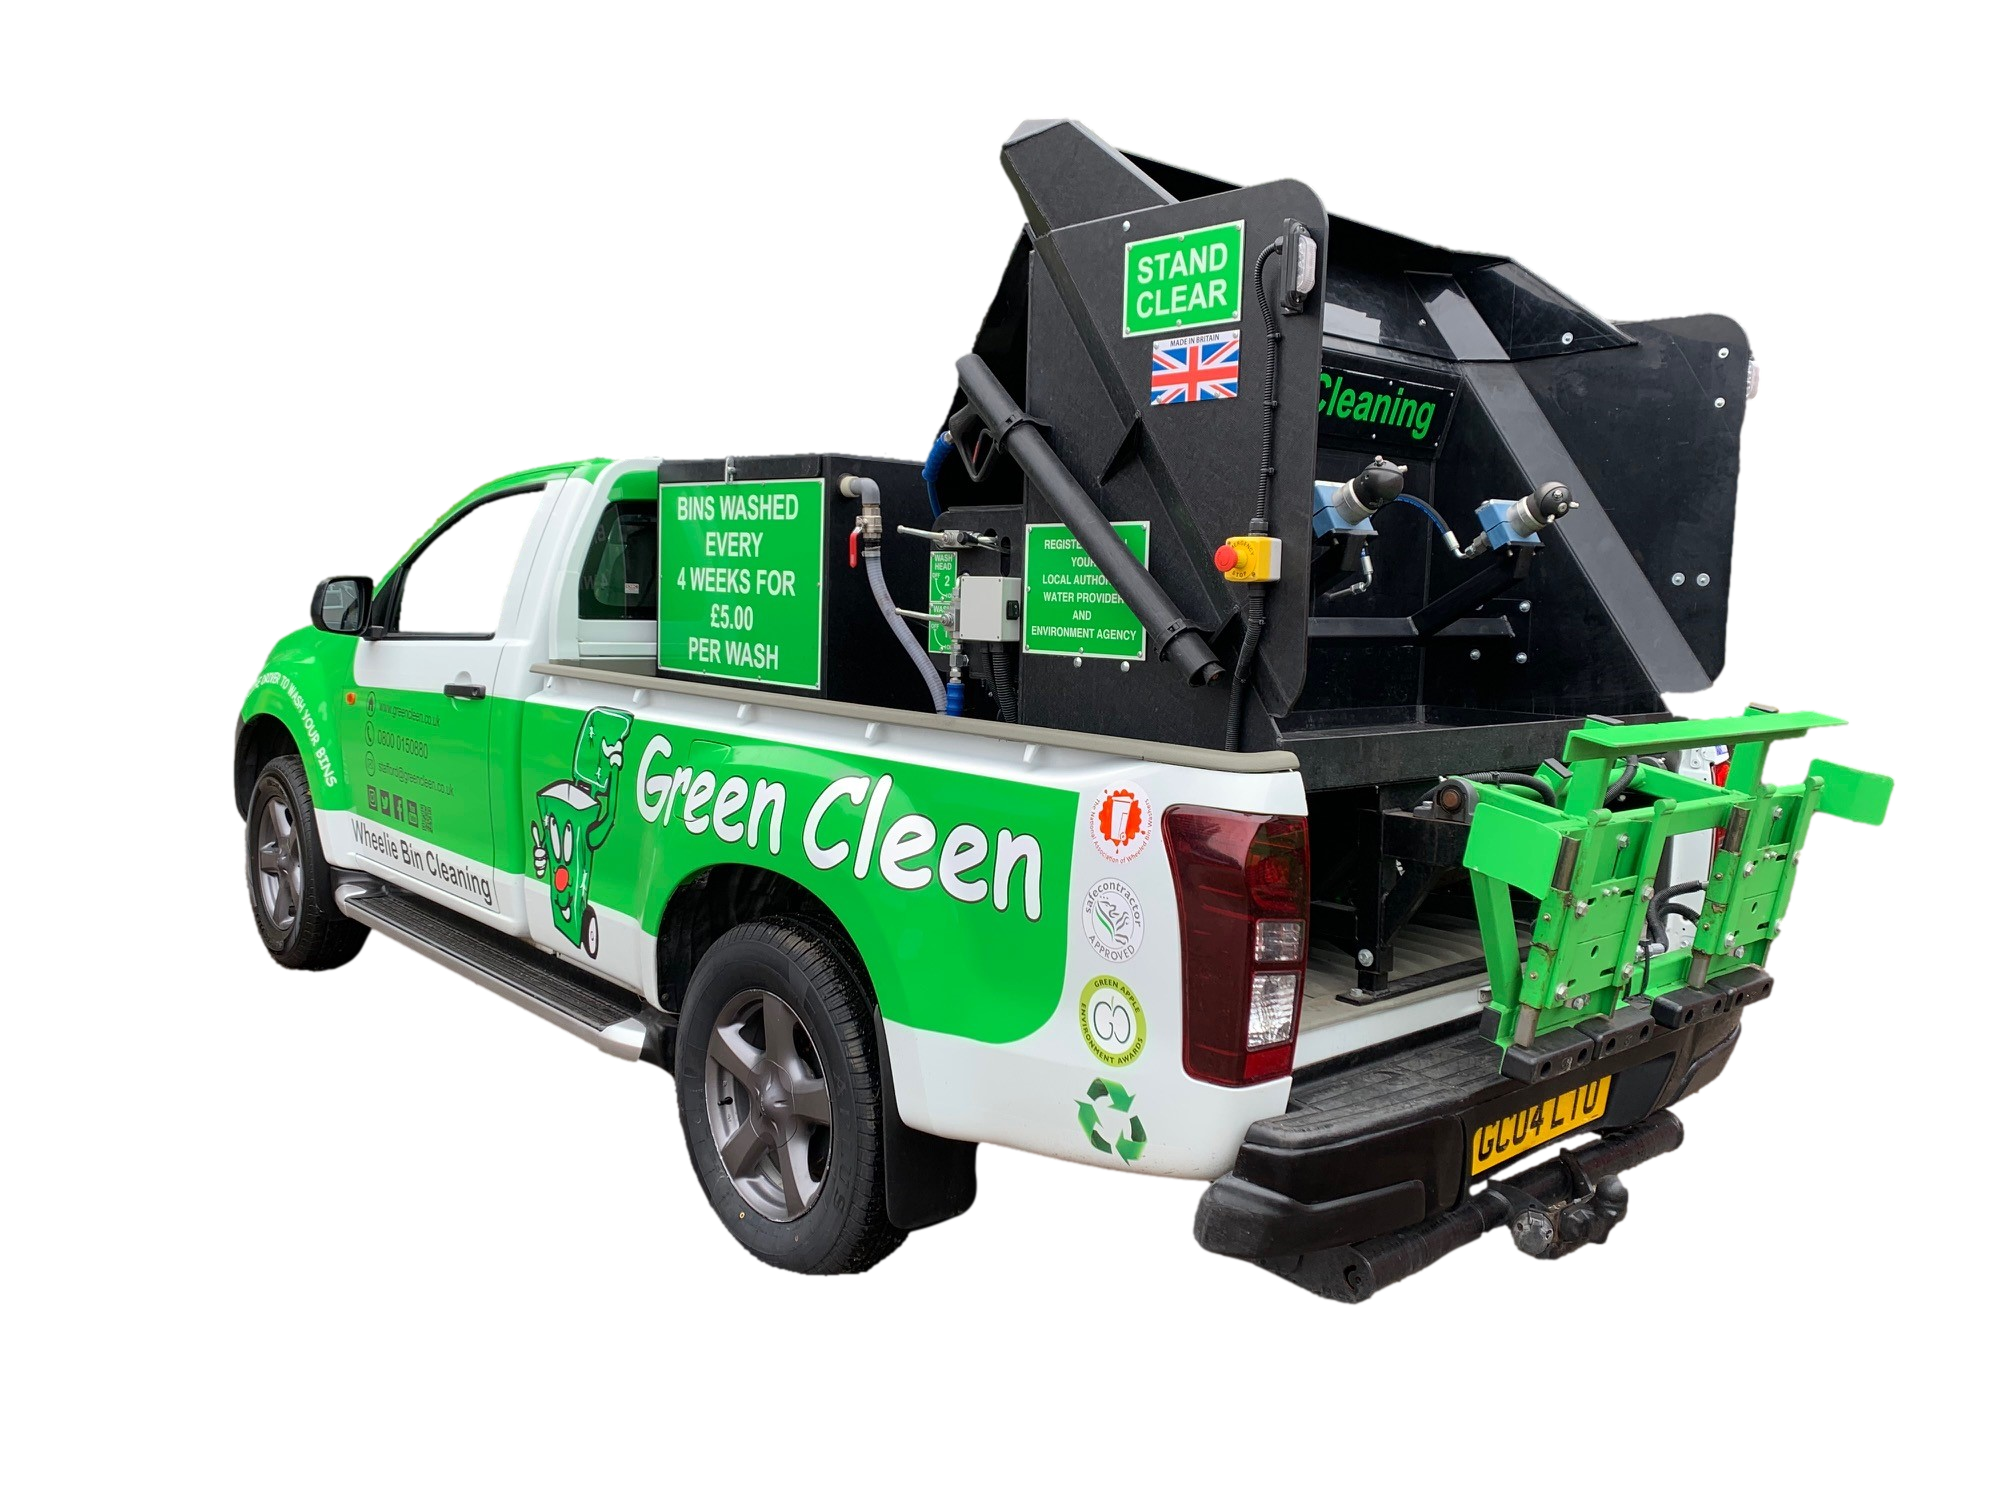 Green Cleen Wheelie Bin Cleaning Equipment